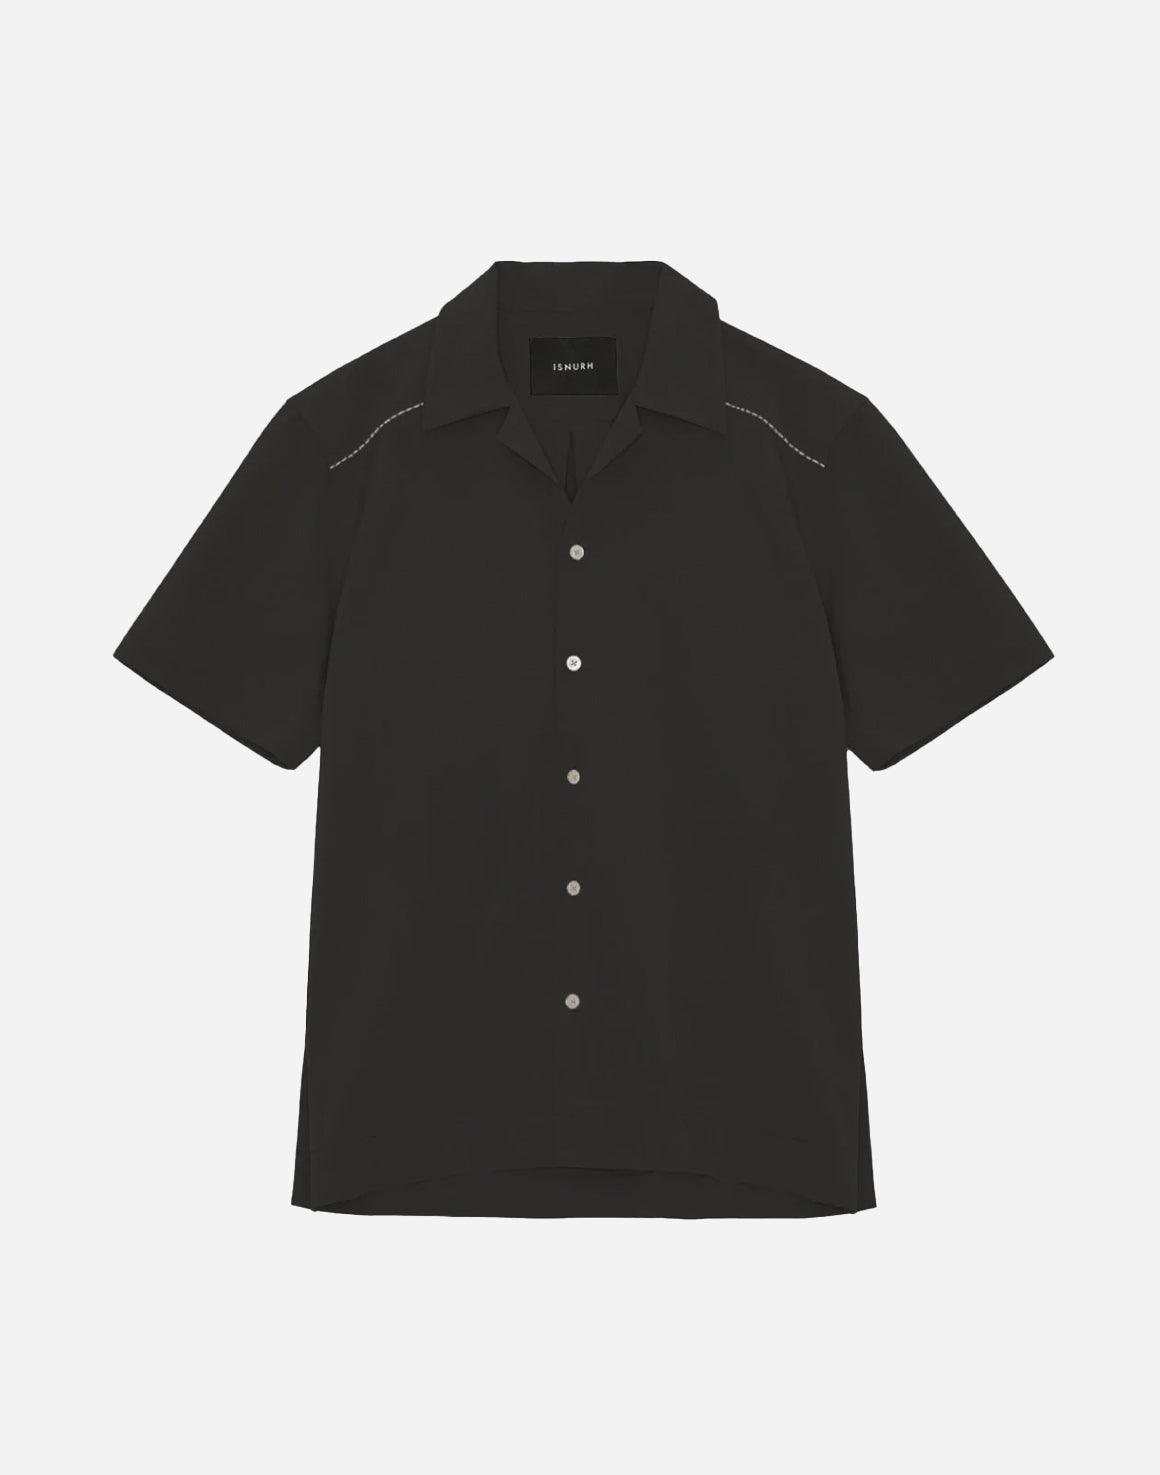 Stitch Shirt - Black - ISNURH - Kul og Koks